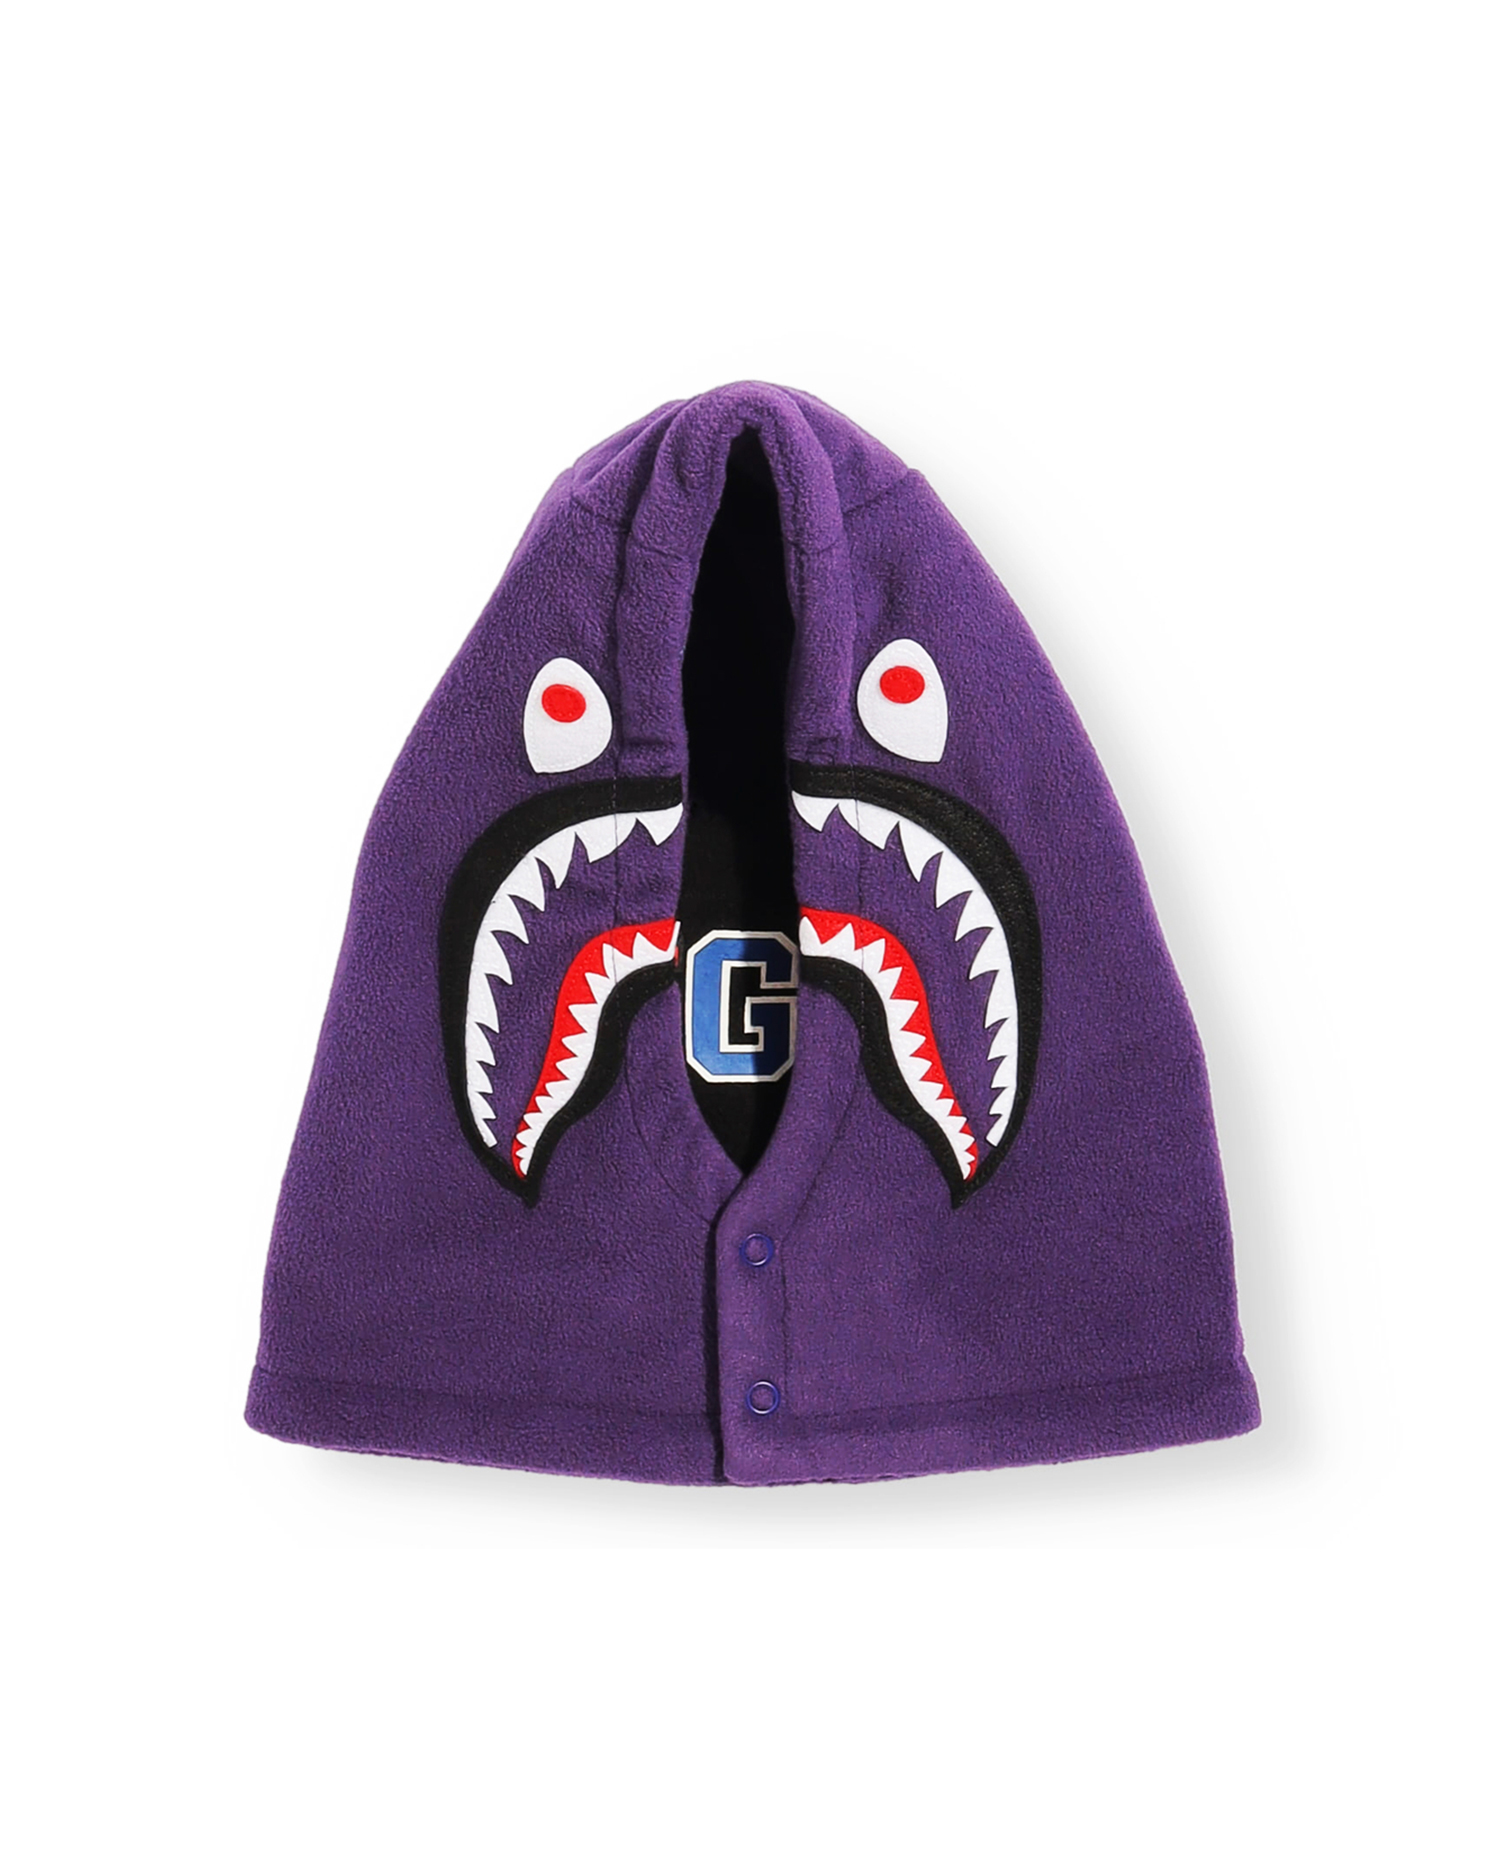 BAPE Shark Hoodie Face Mask Release